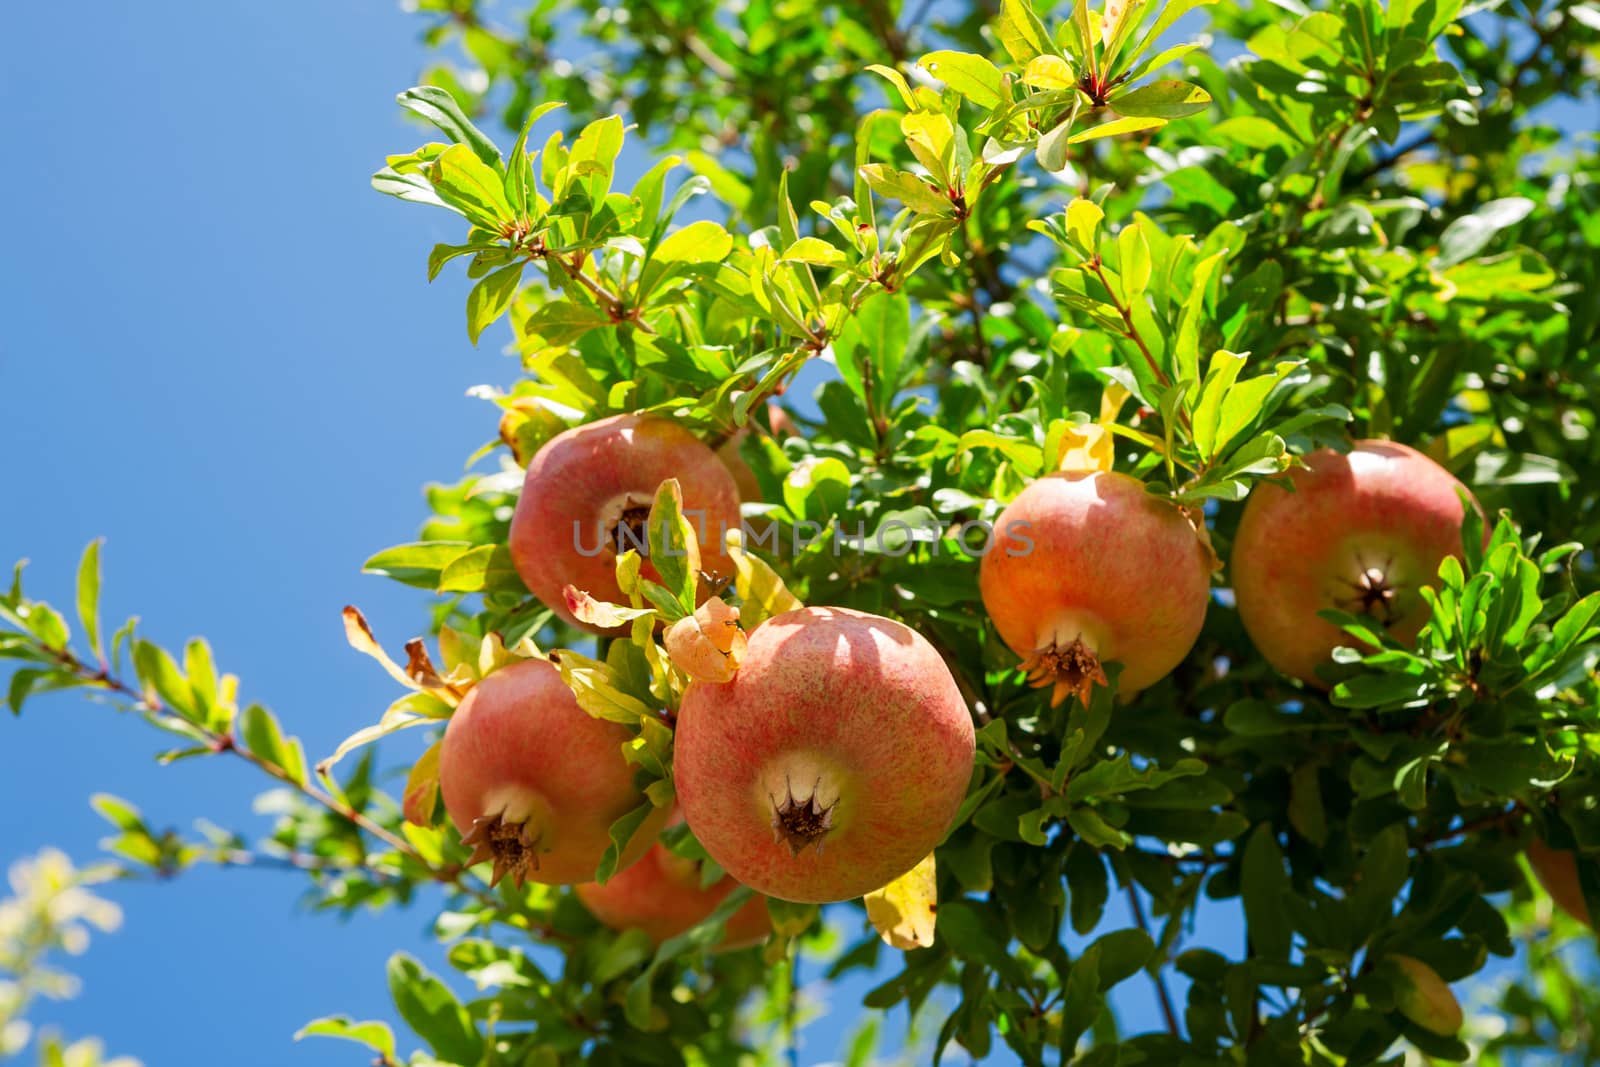 Pomegranate against blue sky background